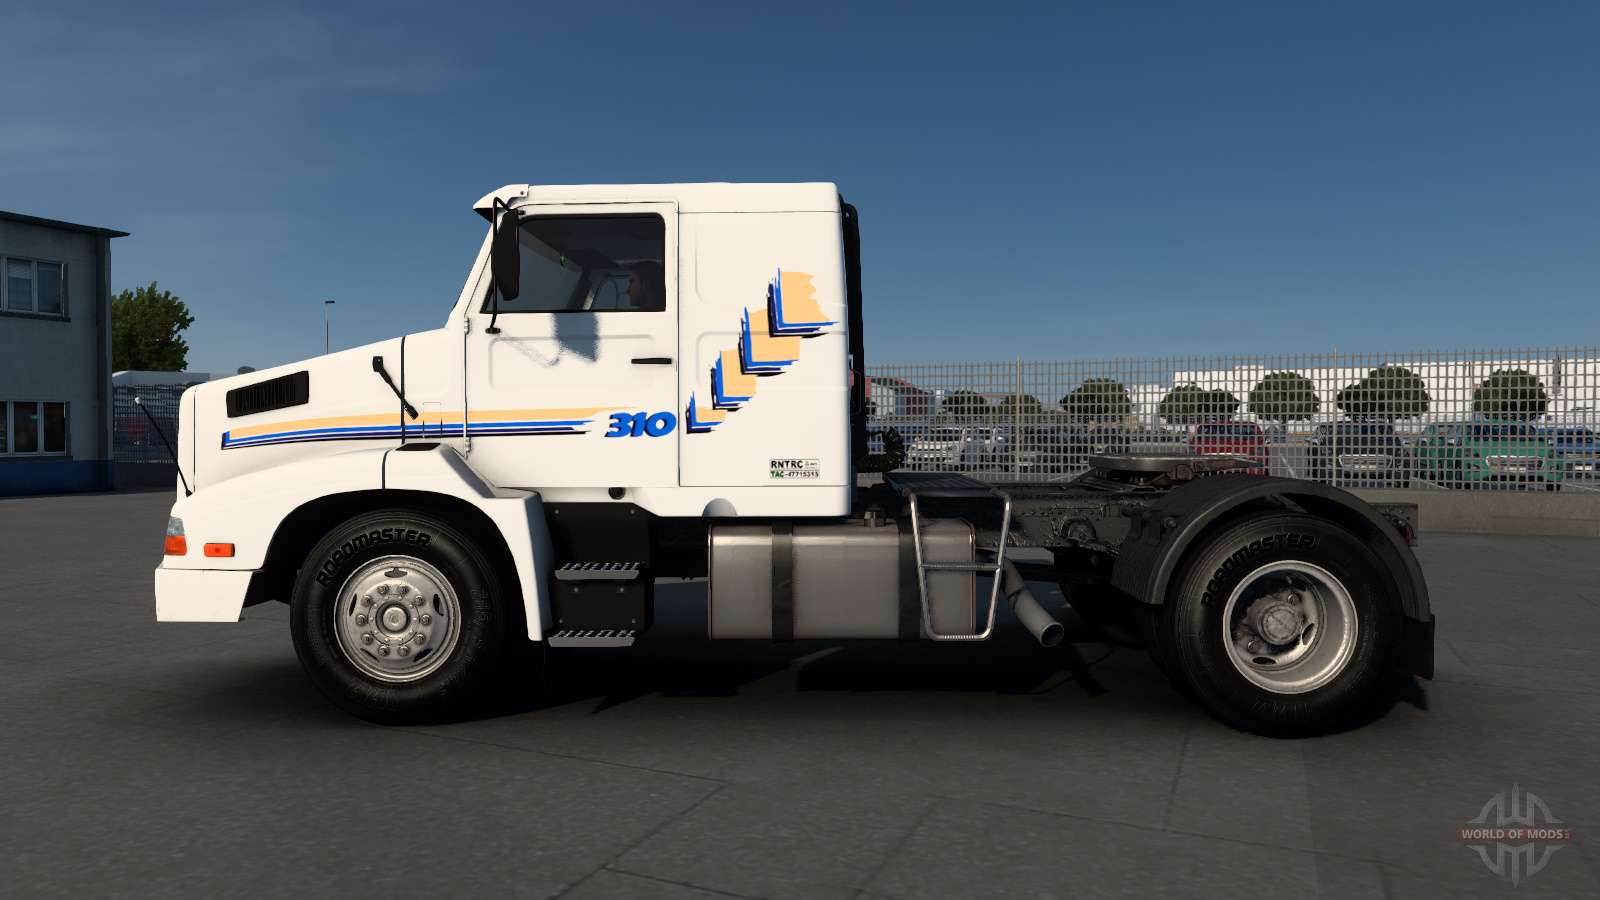 Volvo NL Series for Euro Truck Simulator 2